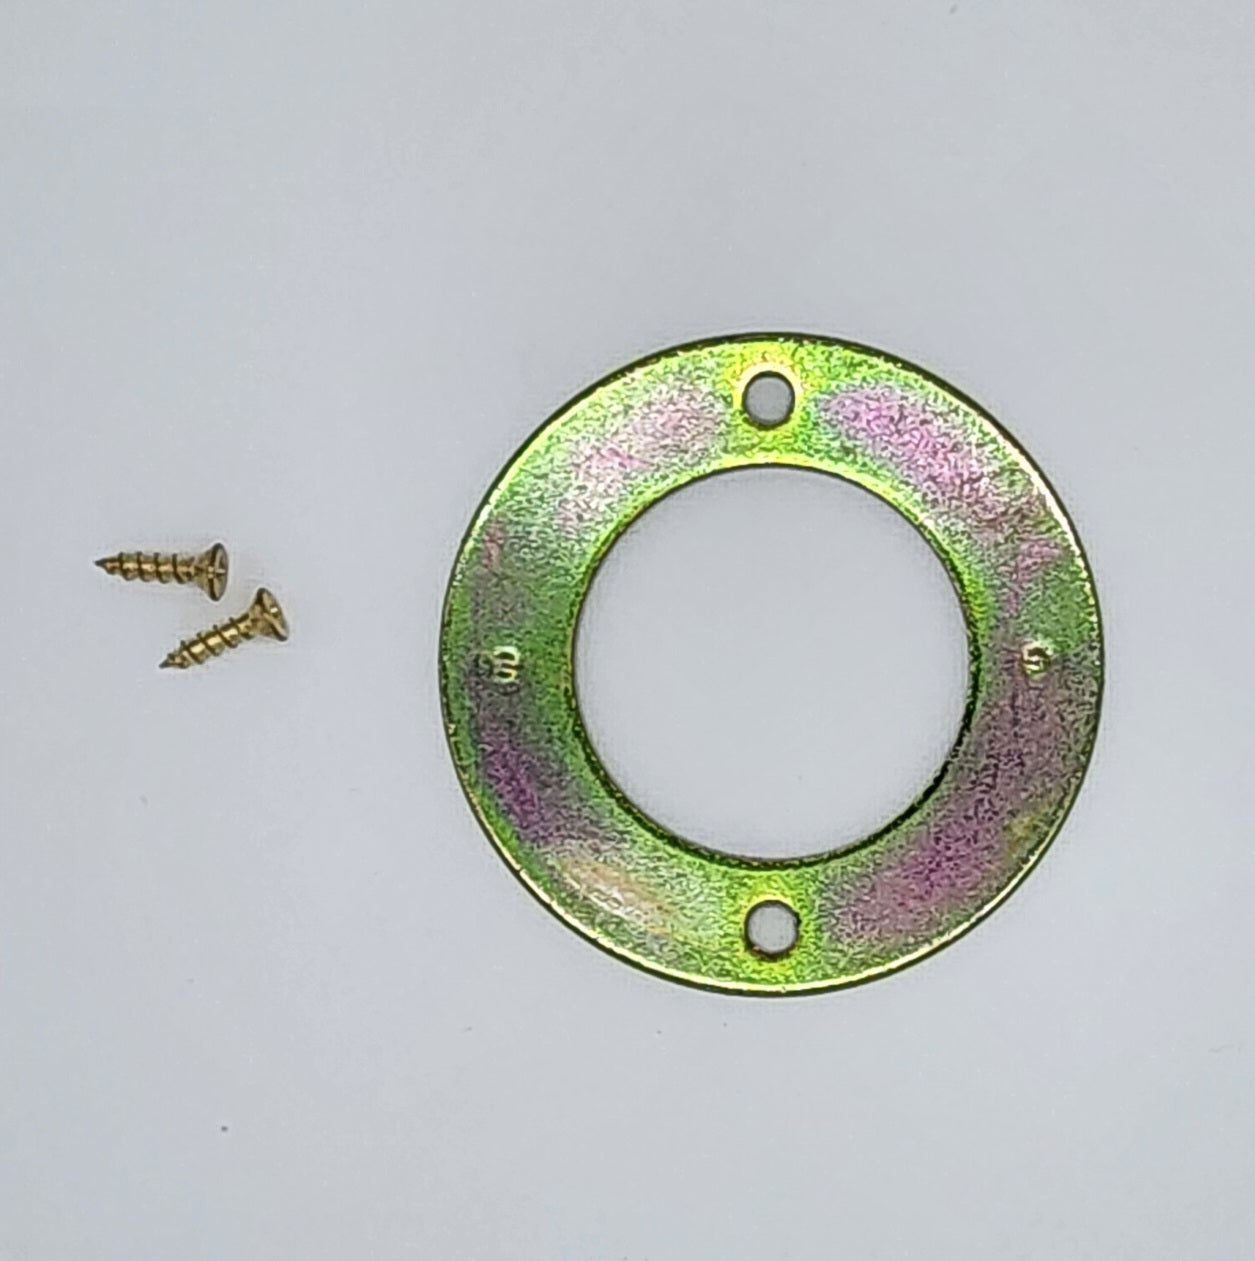 Brass ring with screws